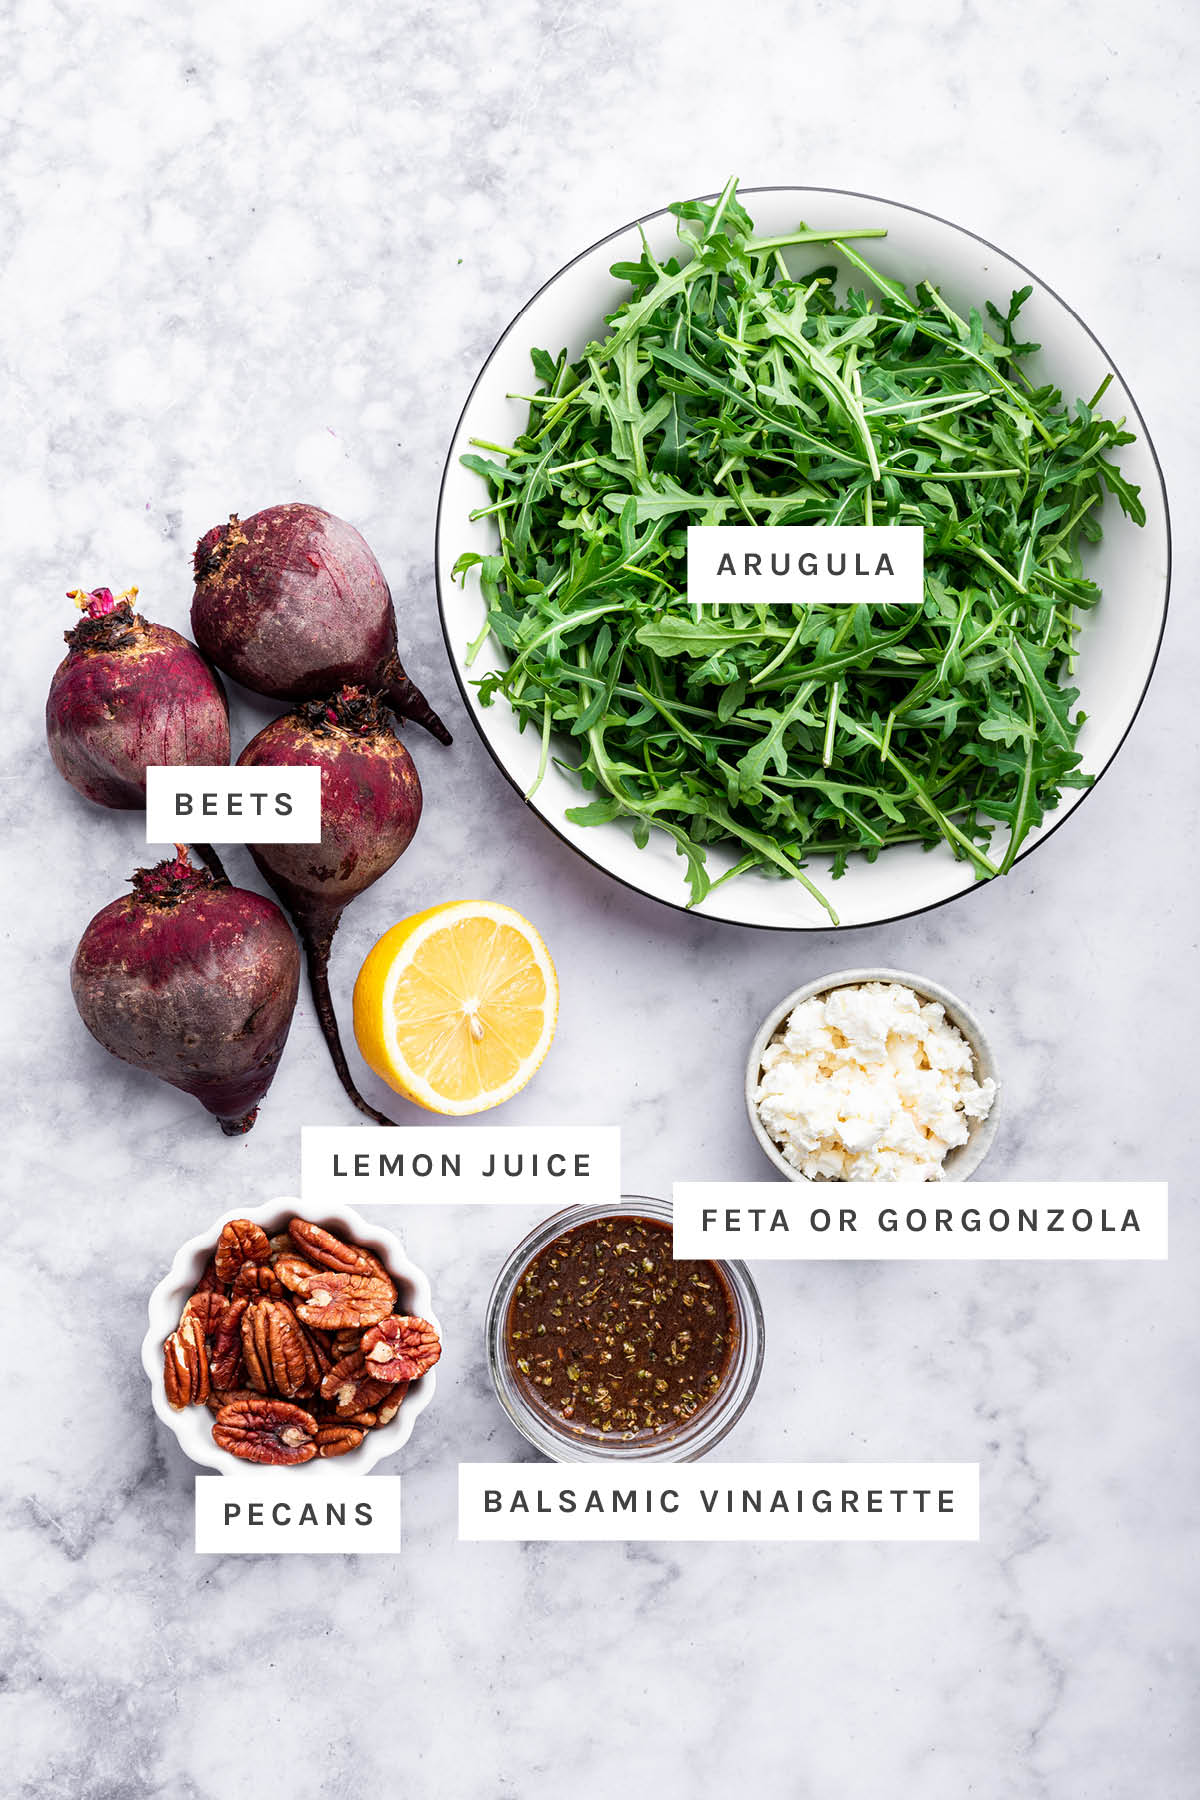 Ingredients measured out to make Beet Salad: beets, arugula, lemon juice, feta, pecans and balsamic vinaigrette.